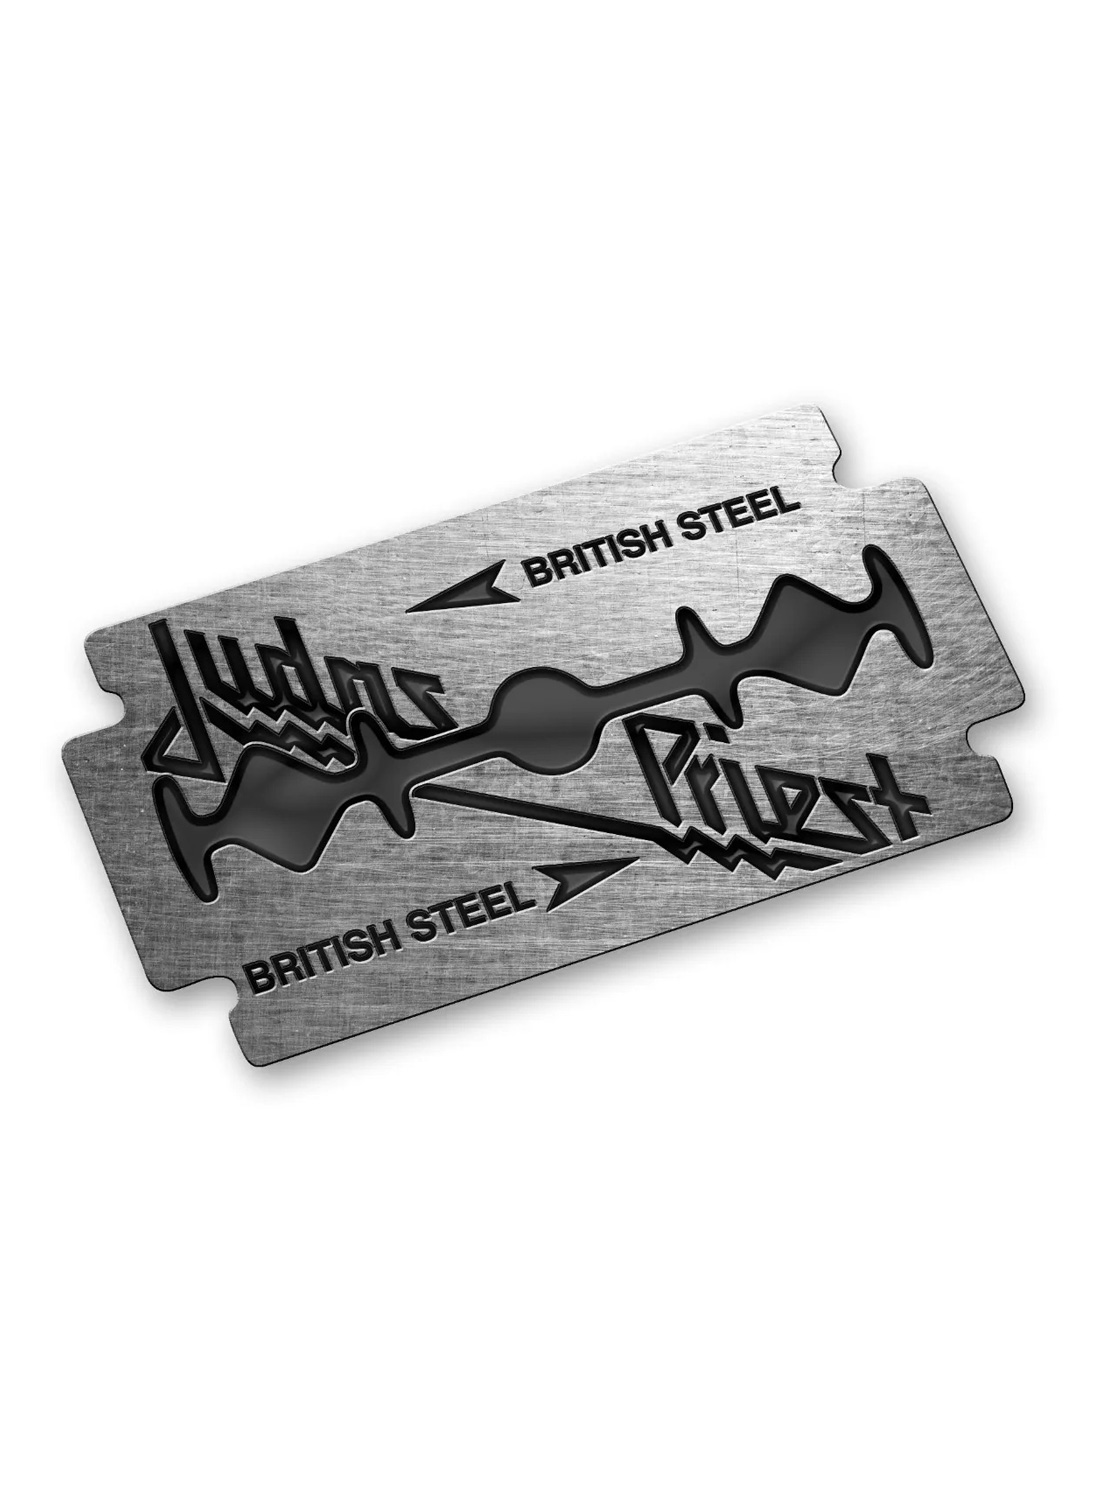 Judas Priest British Steel Metal Pin Badge